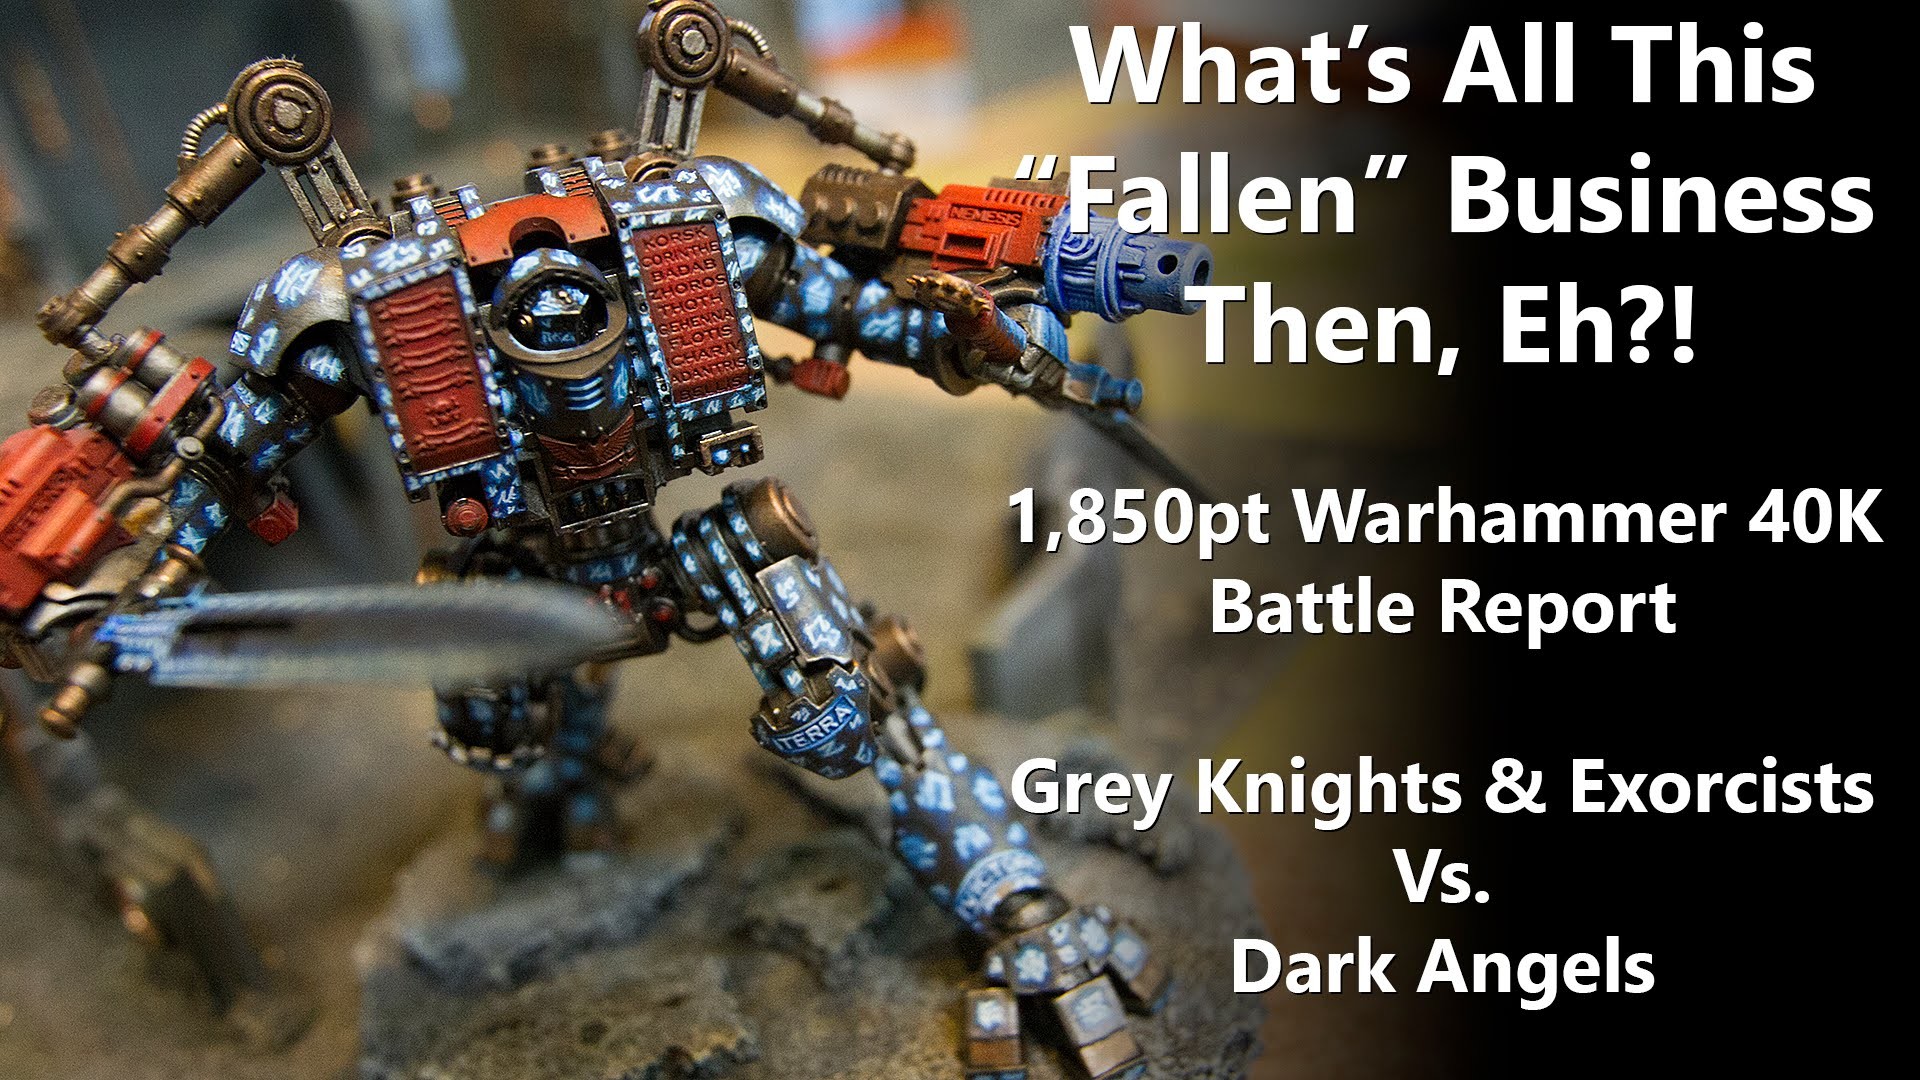 1920x1080 1,850pt Warhammer 40K Battle Report - Grey Knights Vs Dark Angels - YouTube